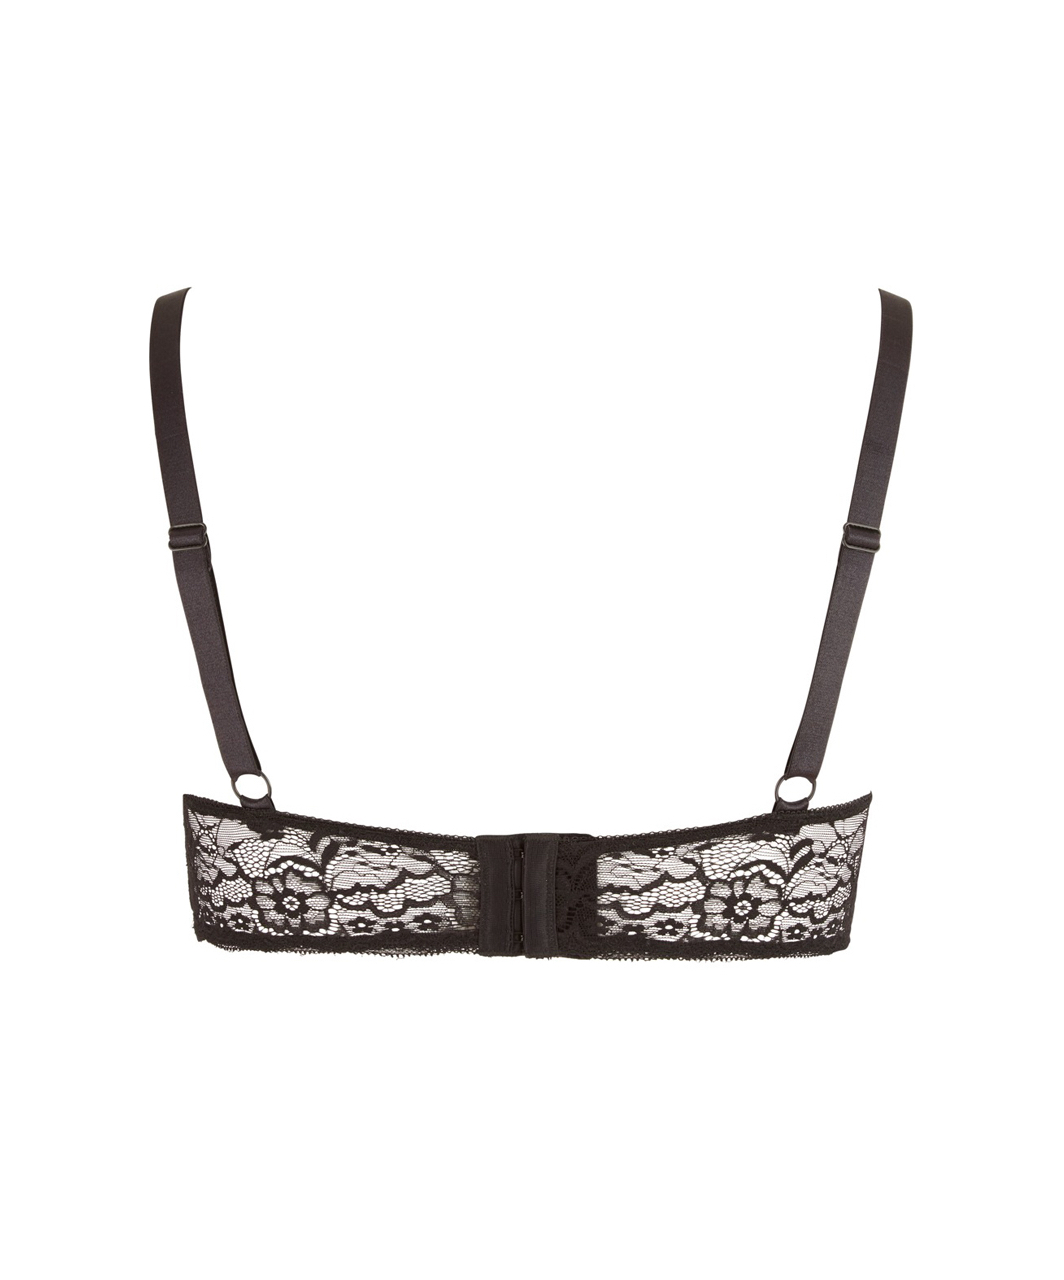 Cottelli Lingerie black lace shelf bra with decorative straps